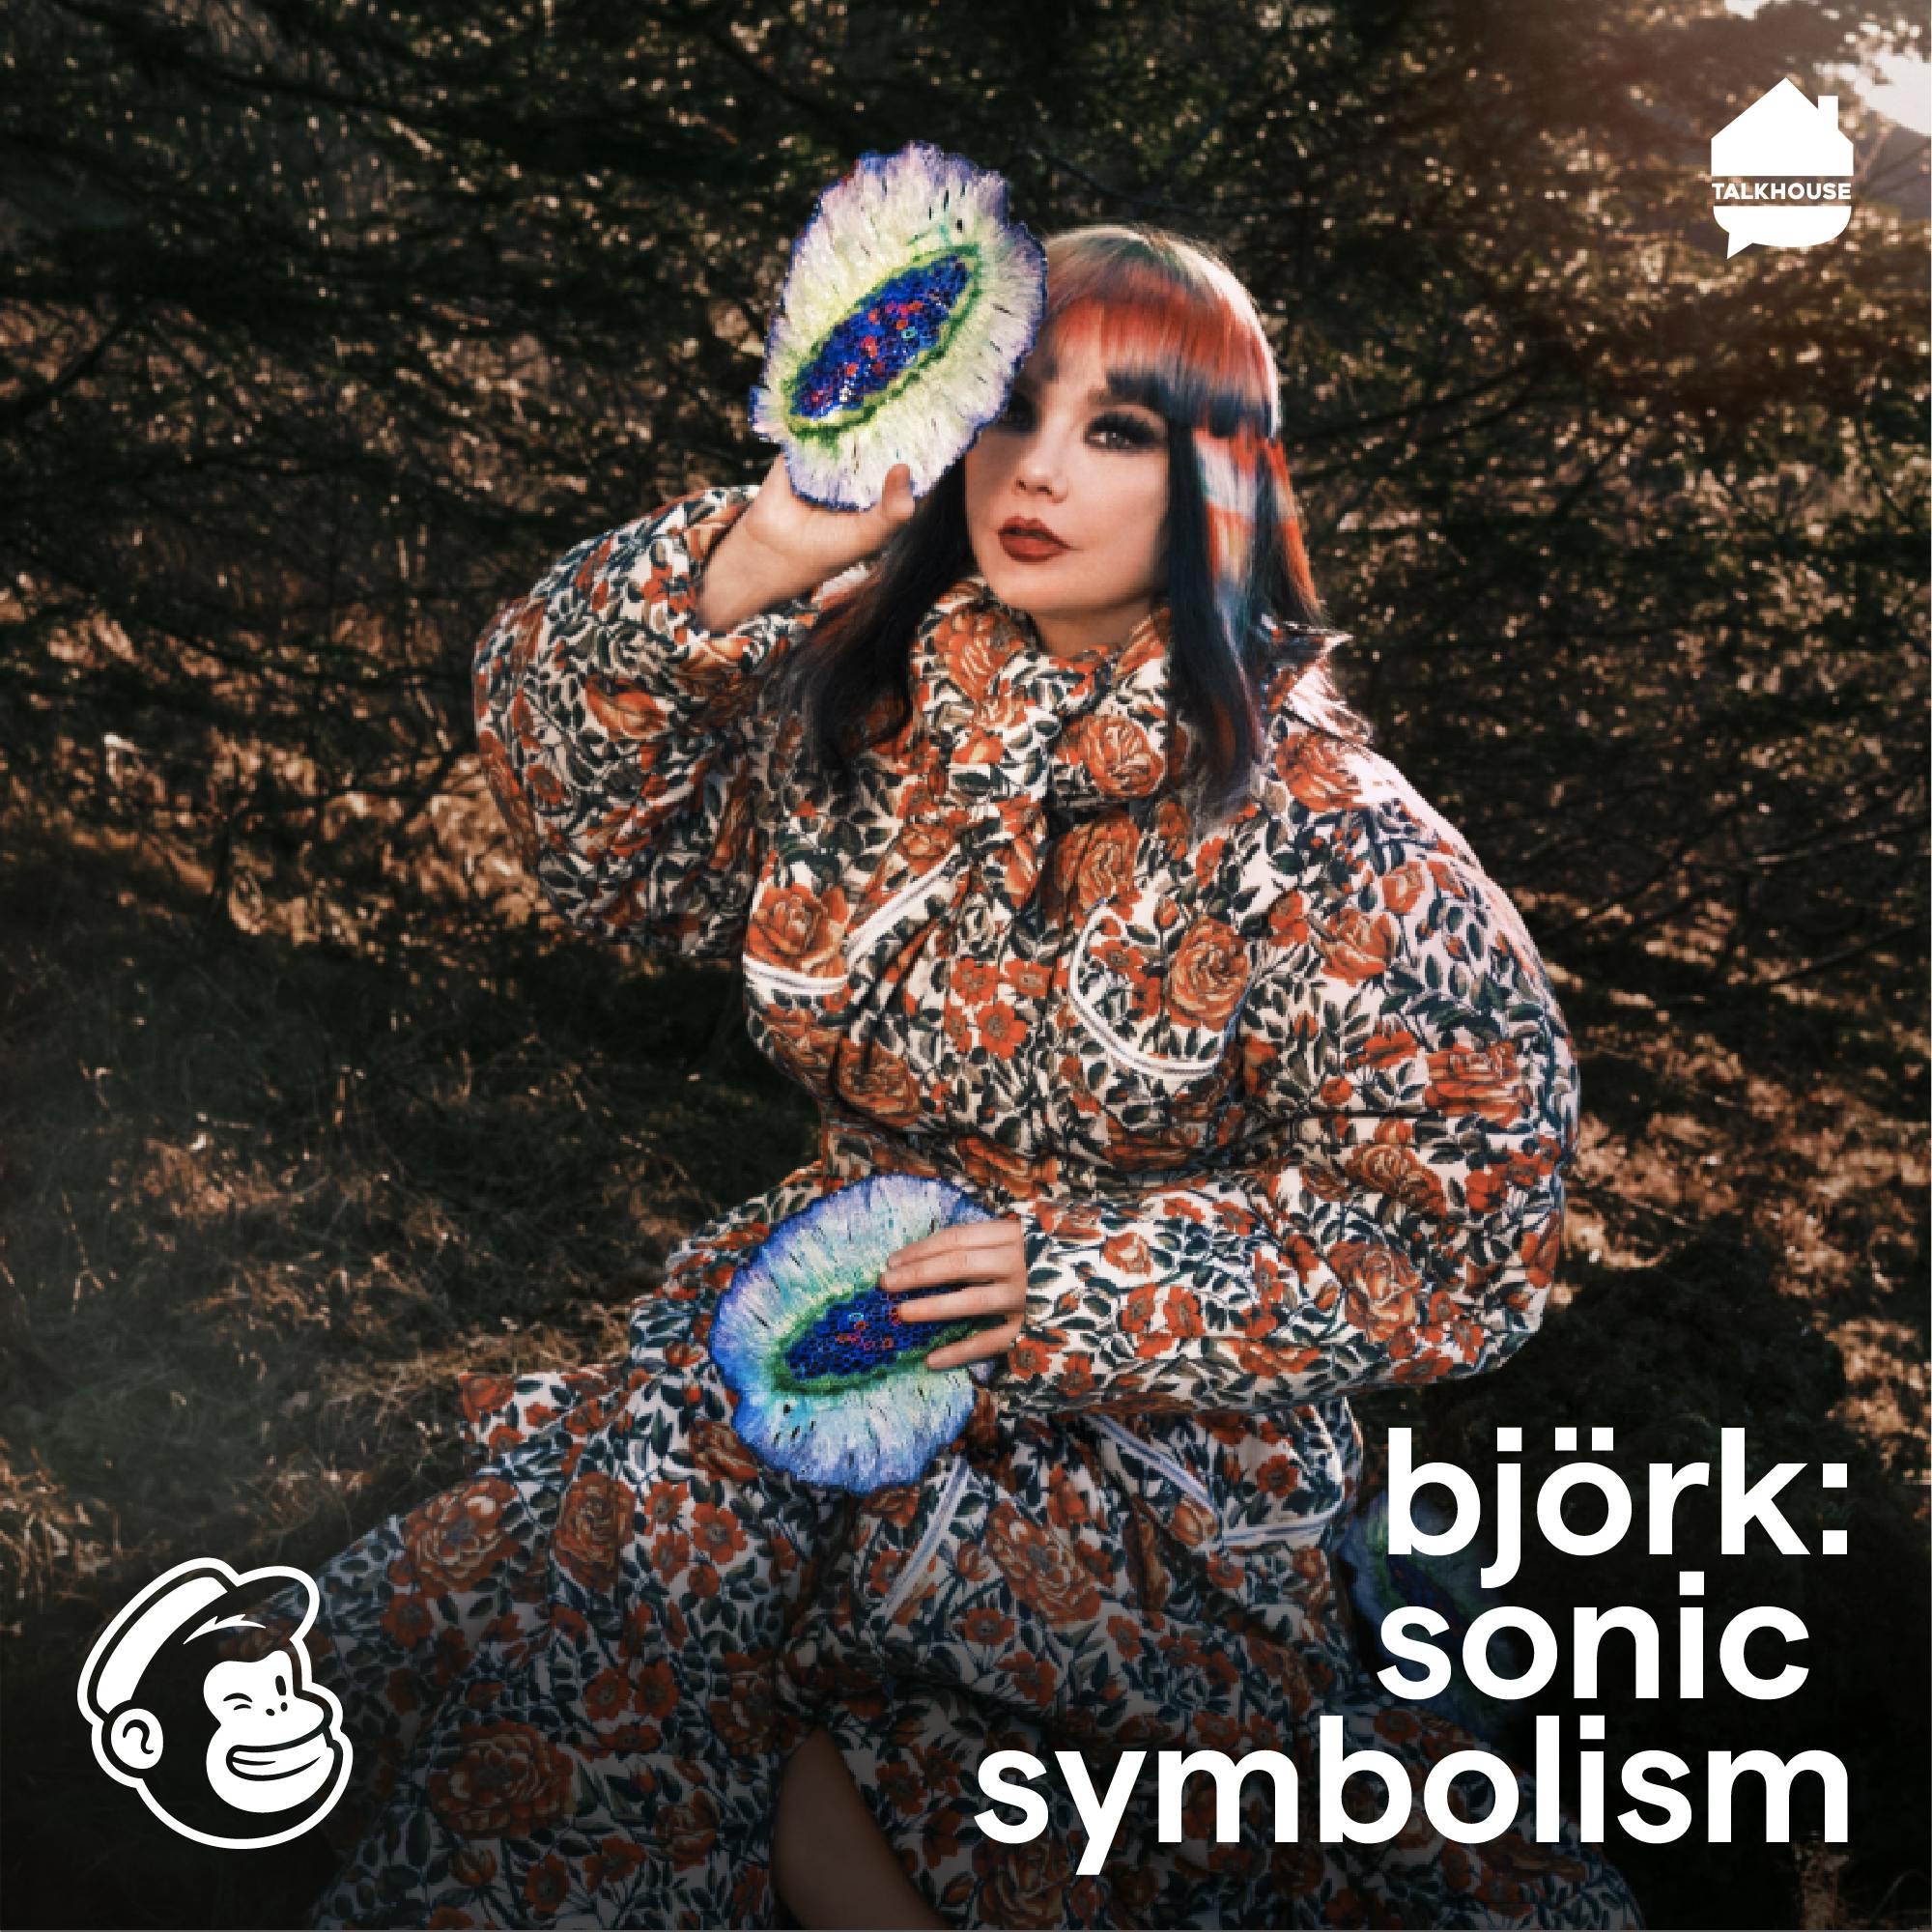 Introducing: Björk: Sonic Symbolism